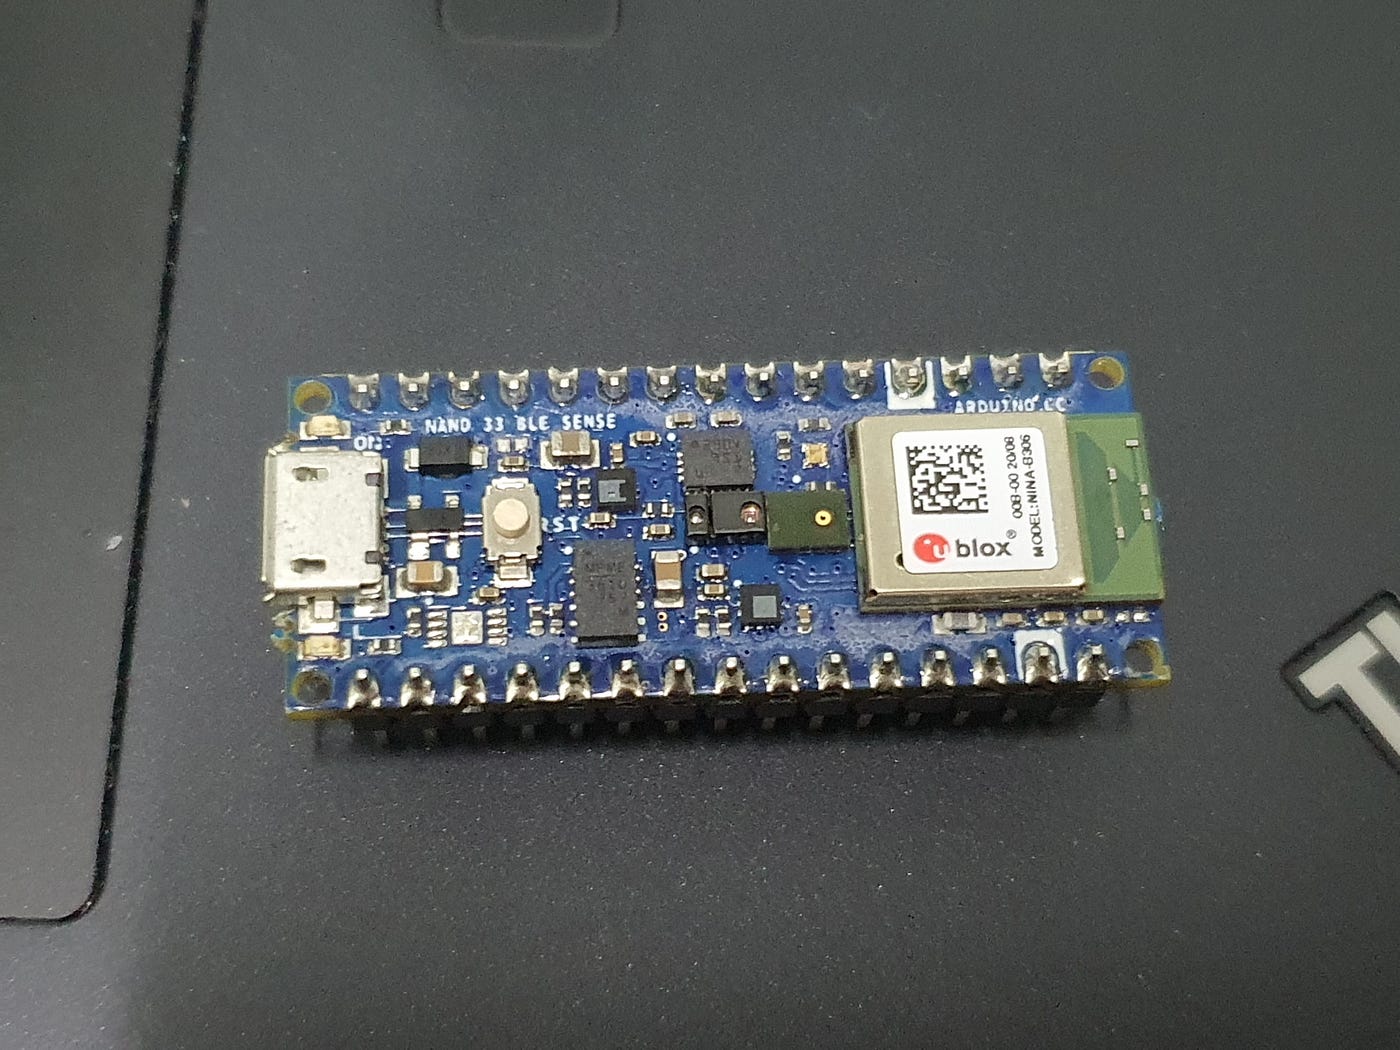 Hardware Overview of the Arduino Nano 33 BLE Sense Development